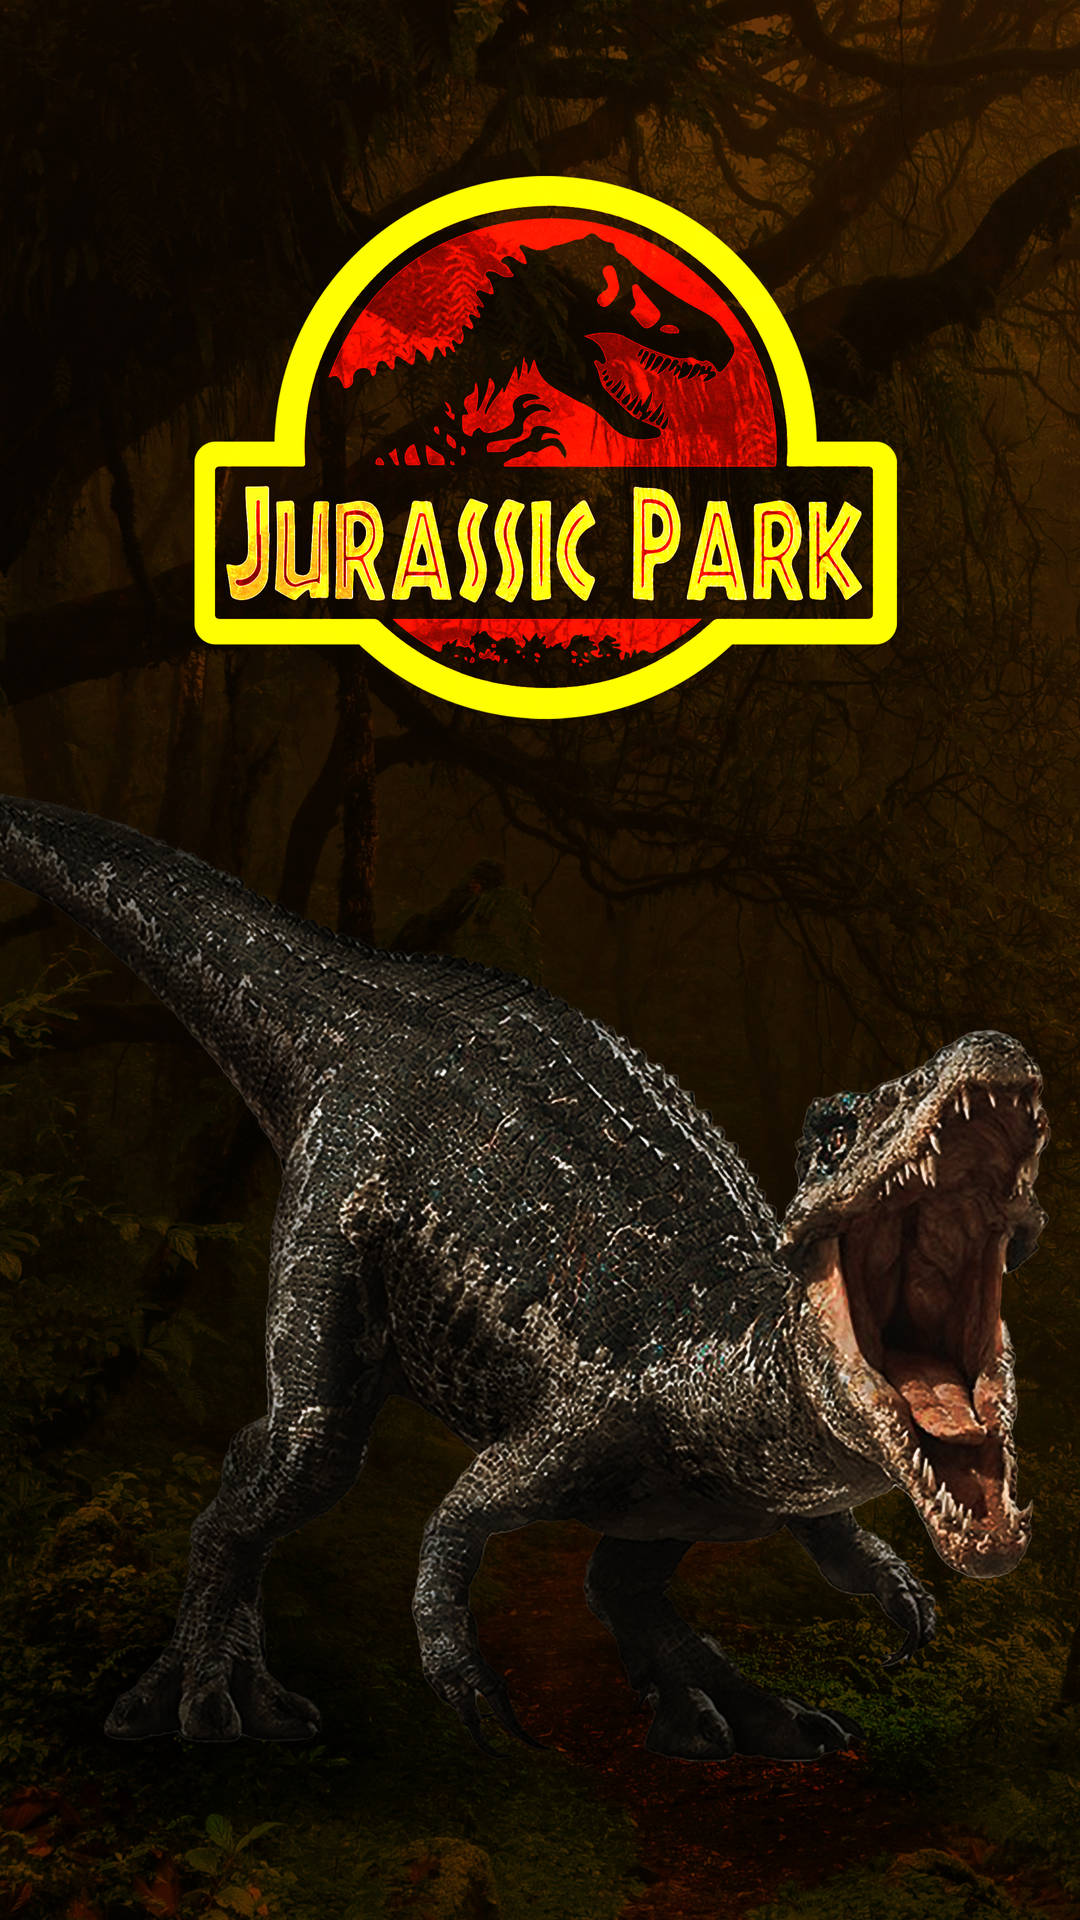 Majestic 4k Image Of Jurassic Park Wallpaper